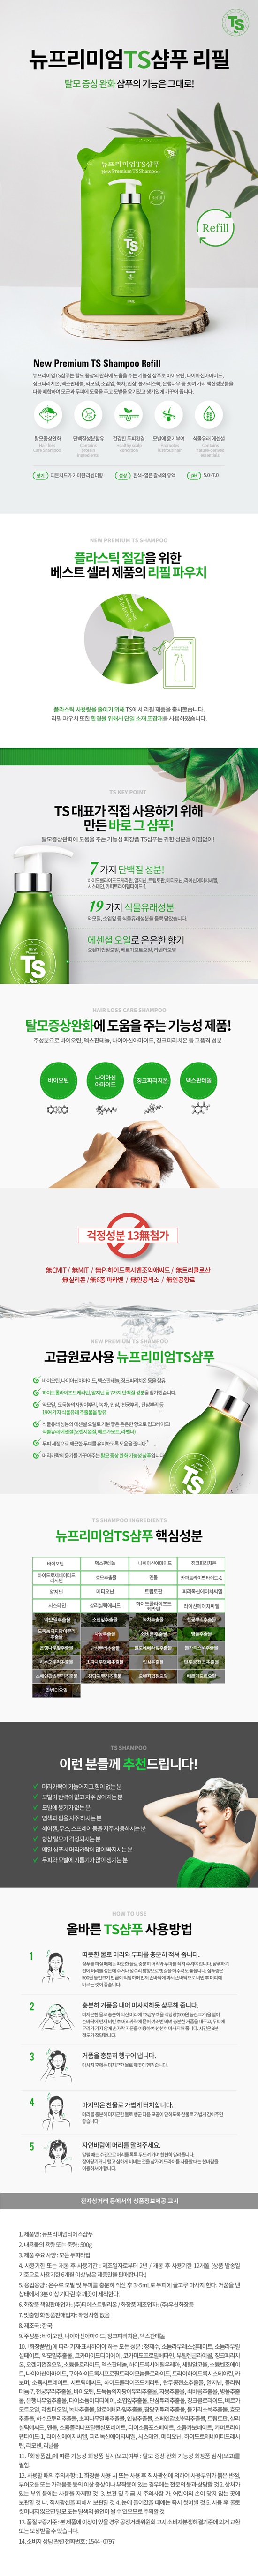 ts-new-premium-shampoo-refill-500g-info.jpg